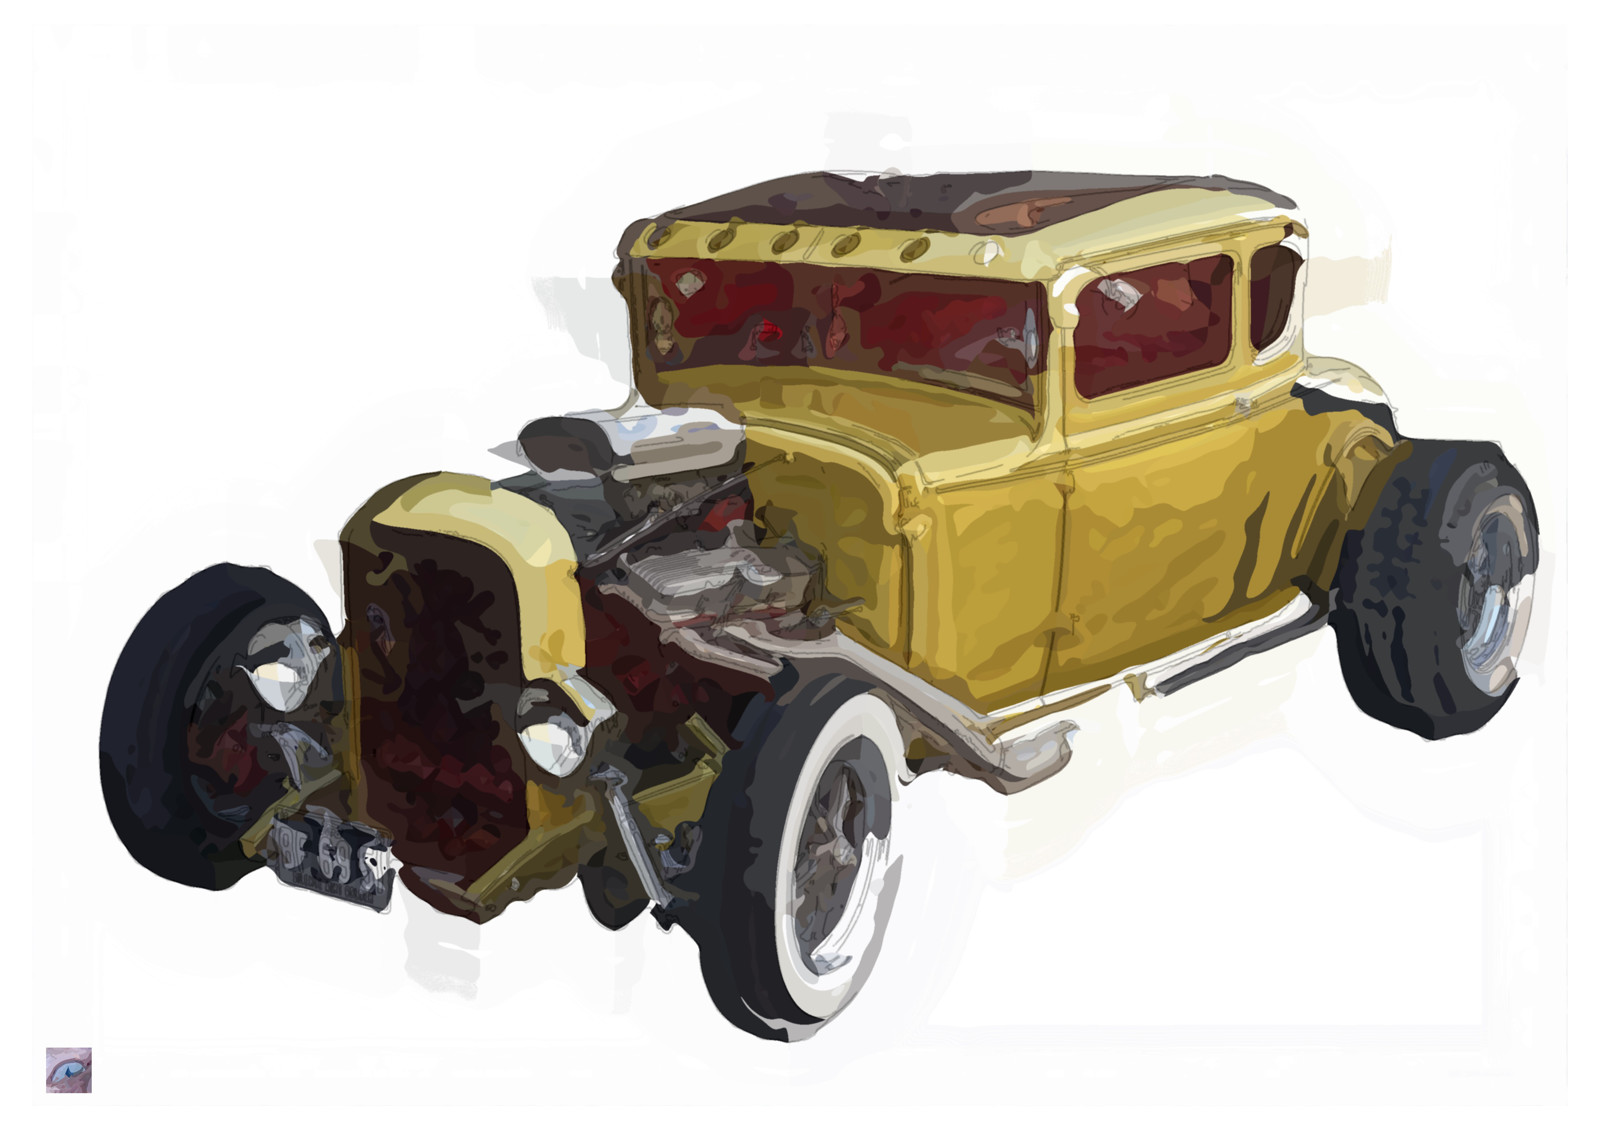 '29 Ford hotrod